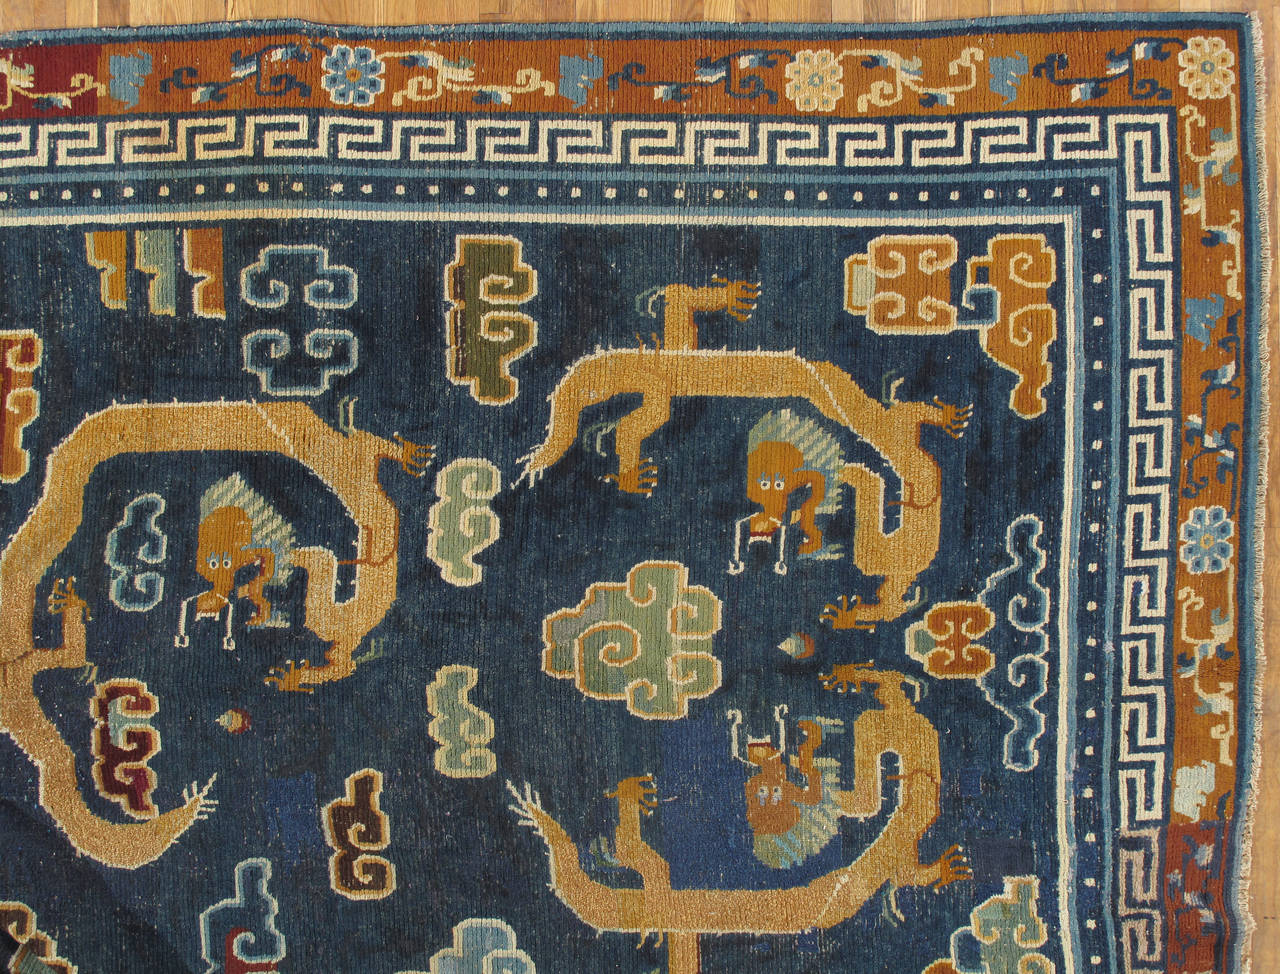 19th Century Antique Tibetan Carpet, Circa 1880 Handmade Oriental Rug, Blue, Gold, Tan, Cream